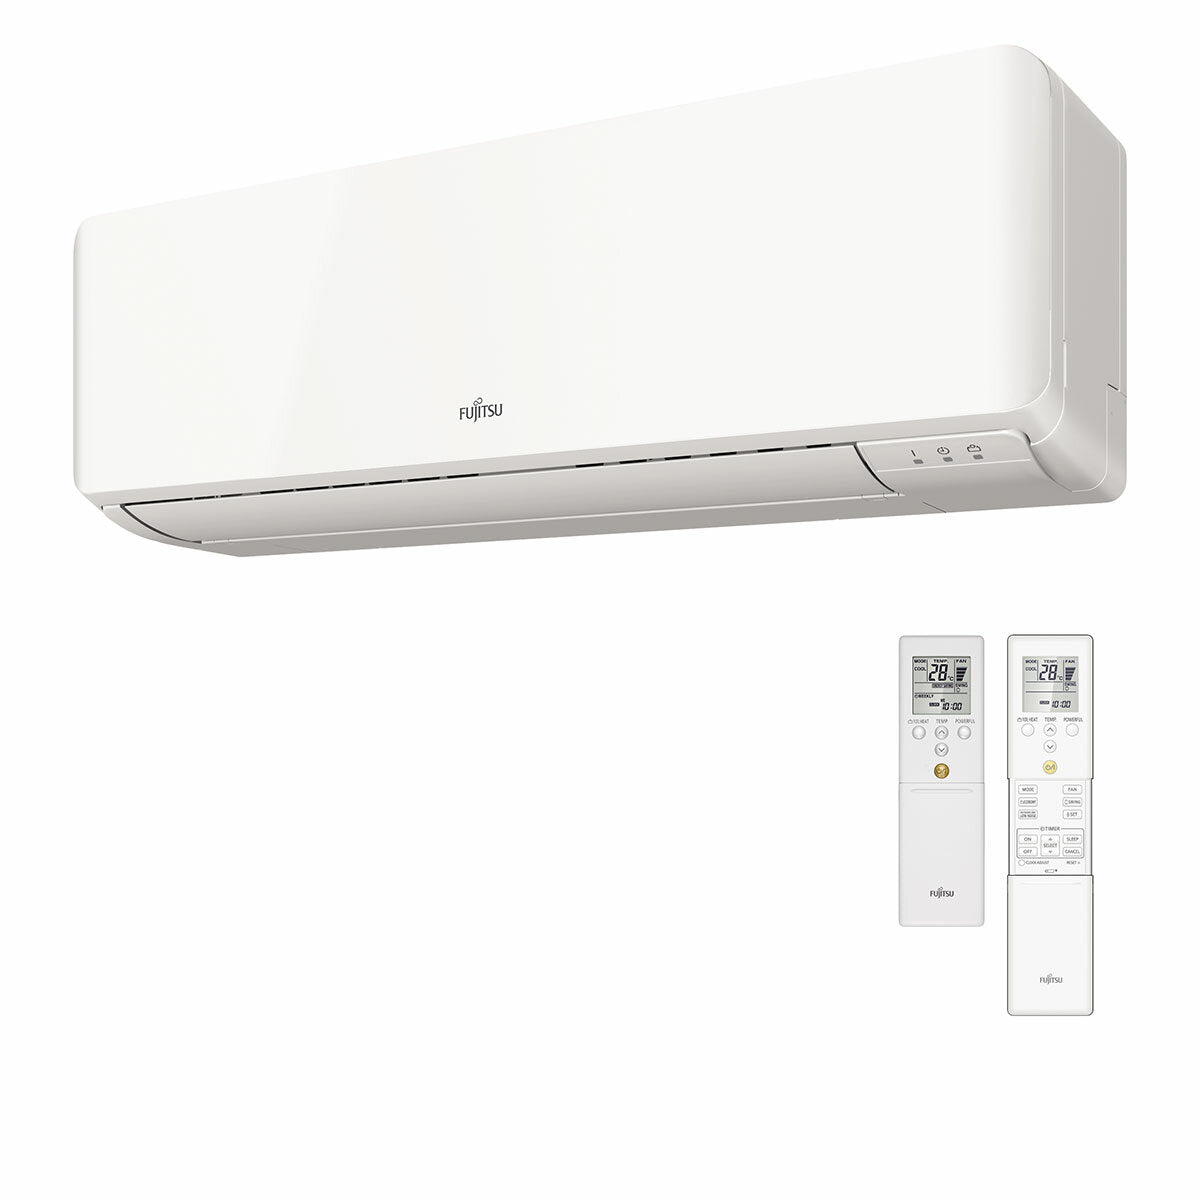 Fujitsu air conditioner KM WiFi Series trial split 7000+9000+9000 BTU inverter A+++ external unit 5.4 kW